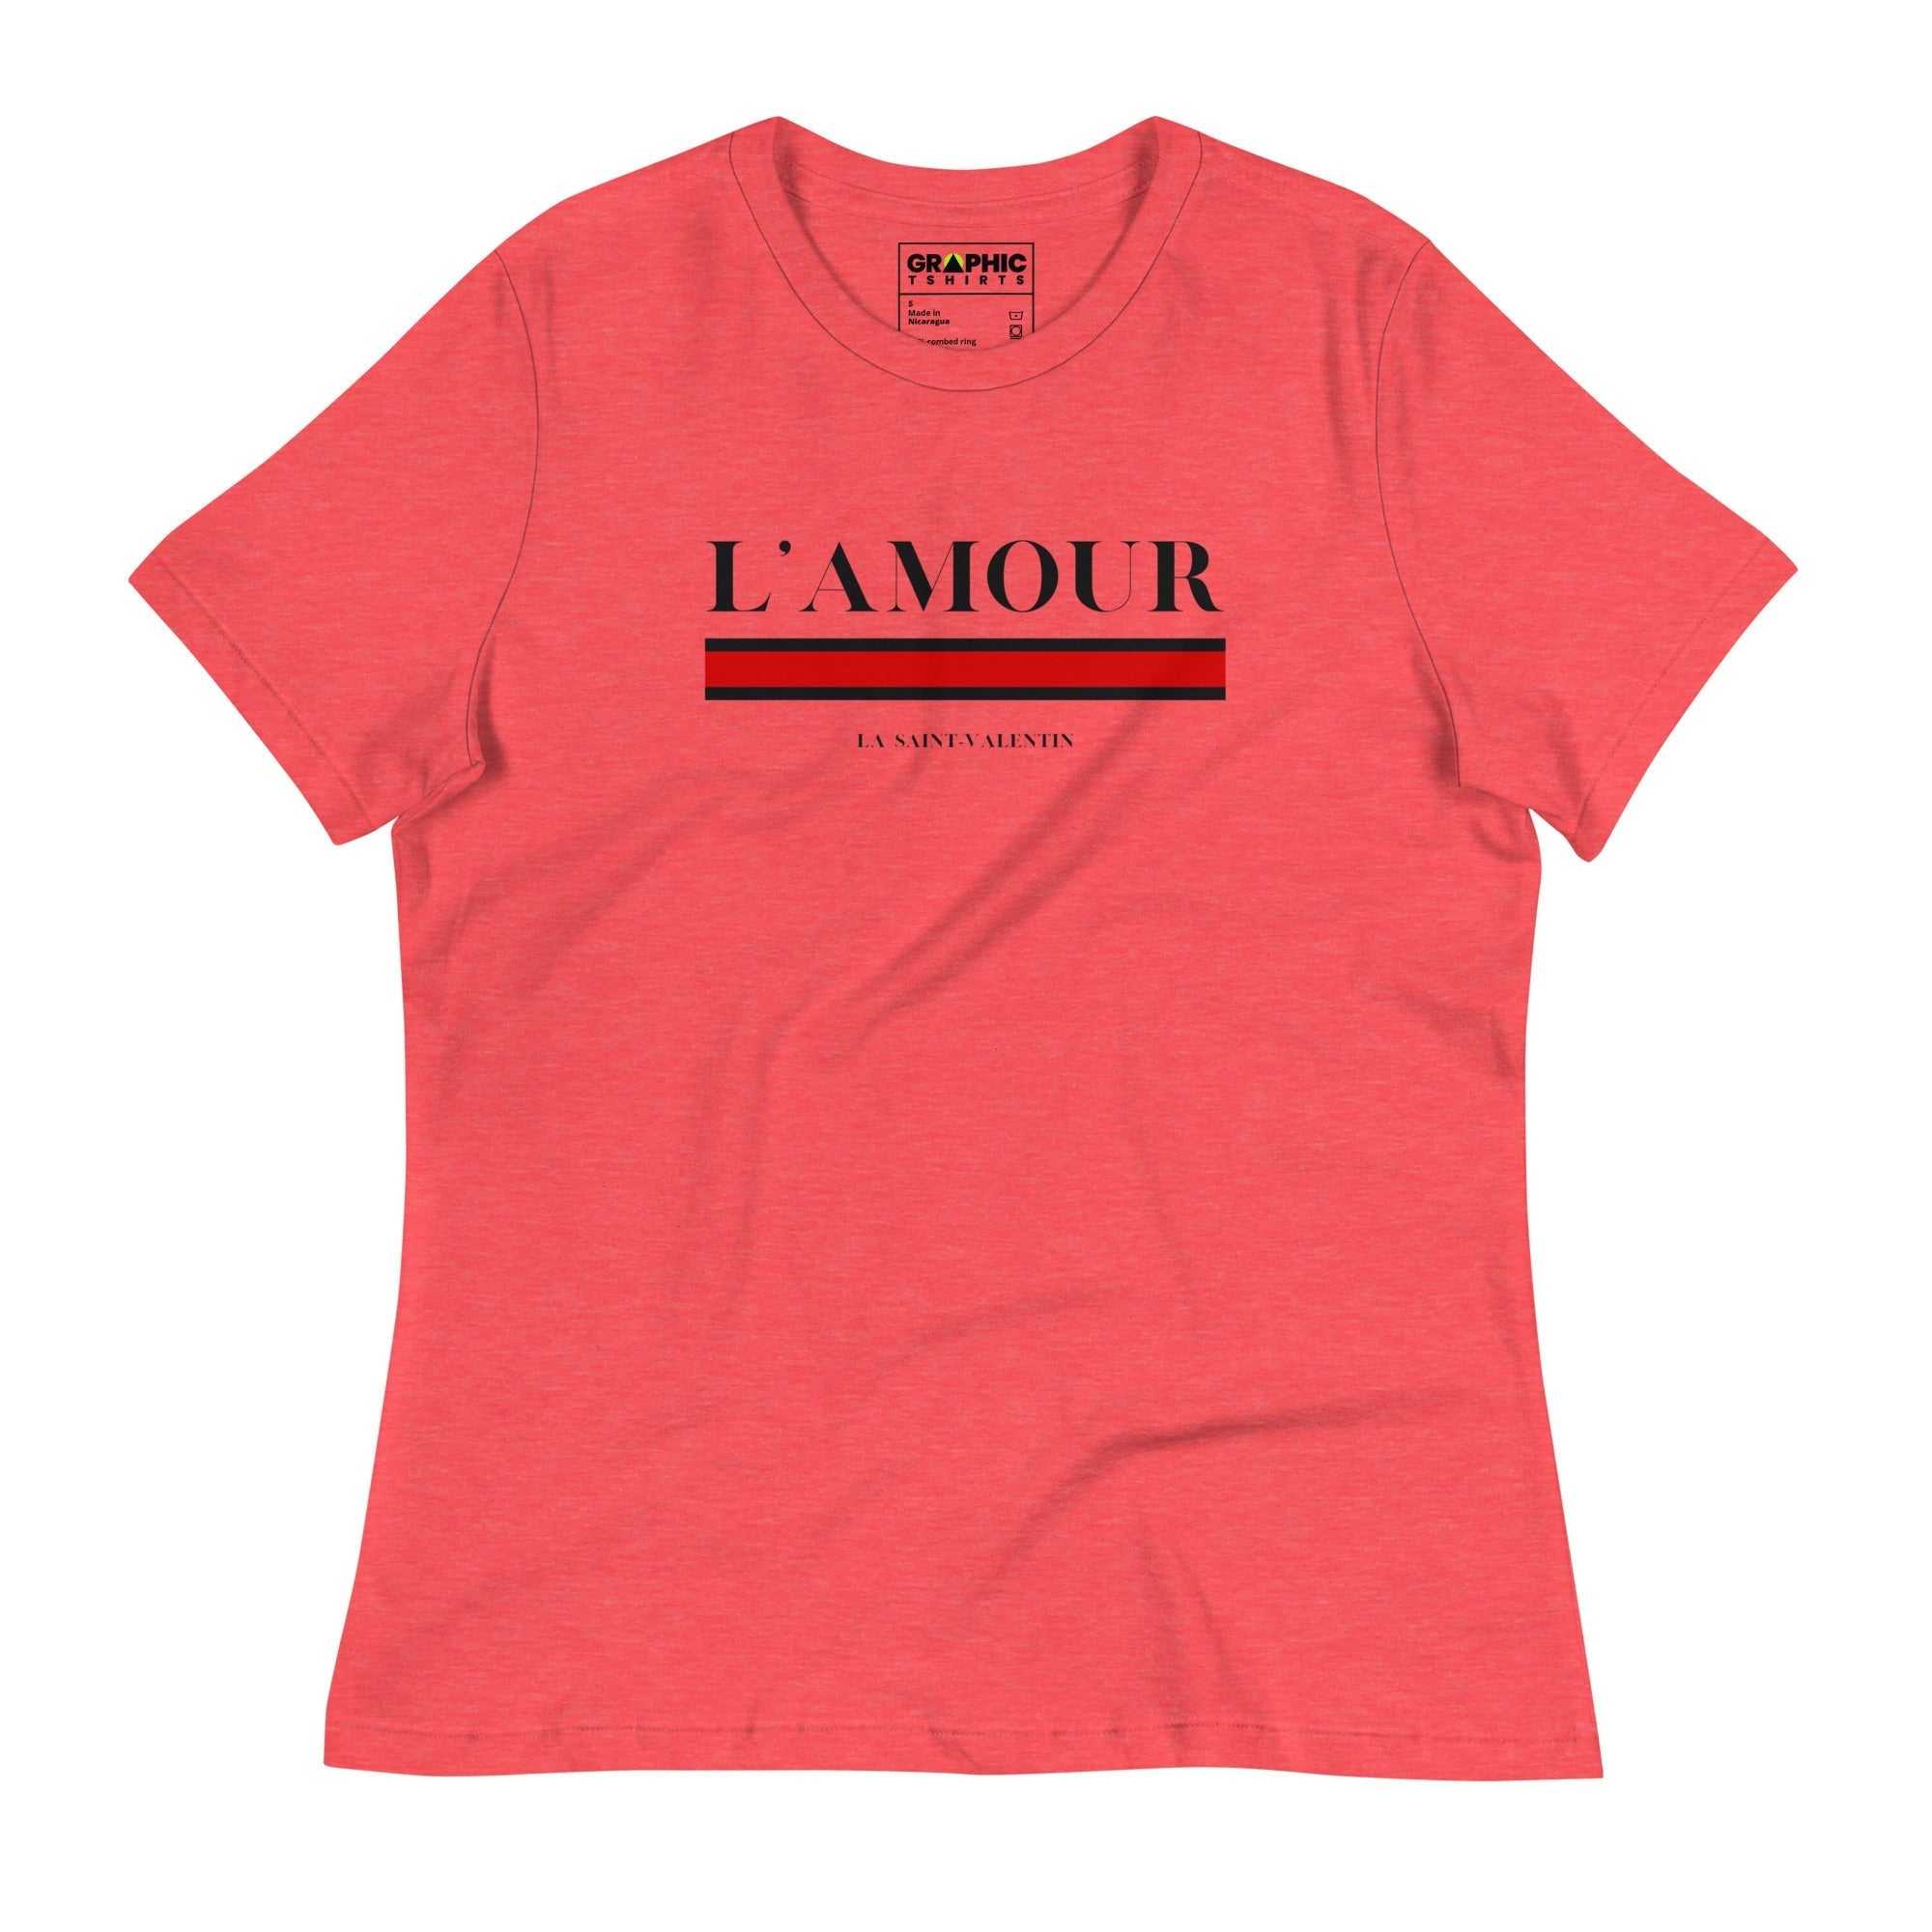 Women's Relaxed T-Shirt - L'Amour La Saint Valentin - GRAPHIC T-SHIRTS